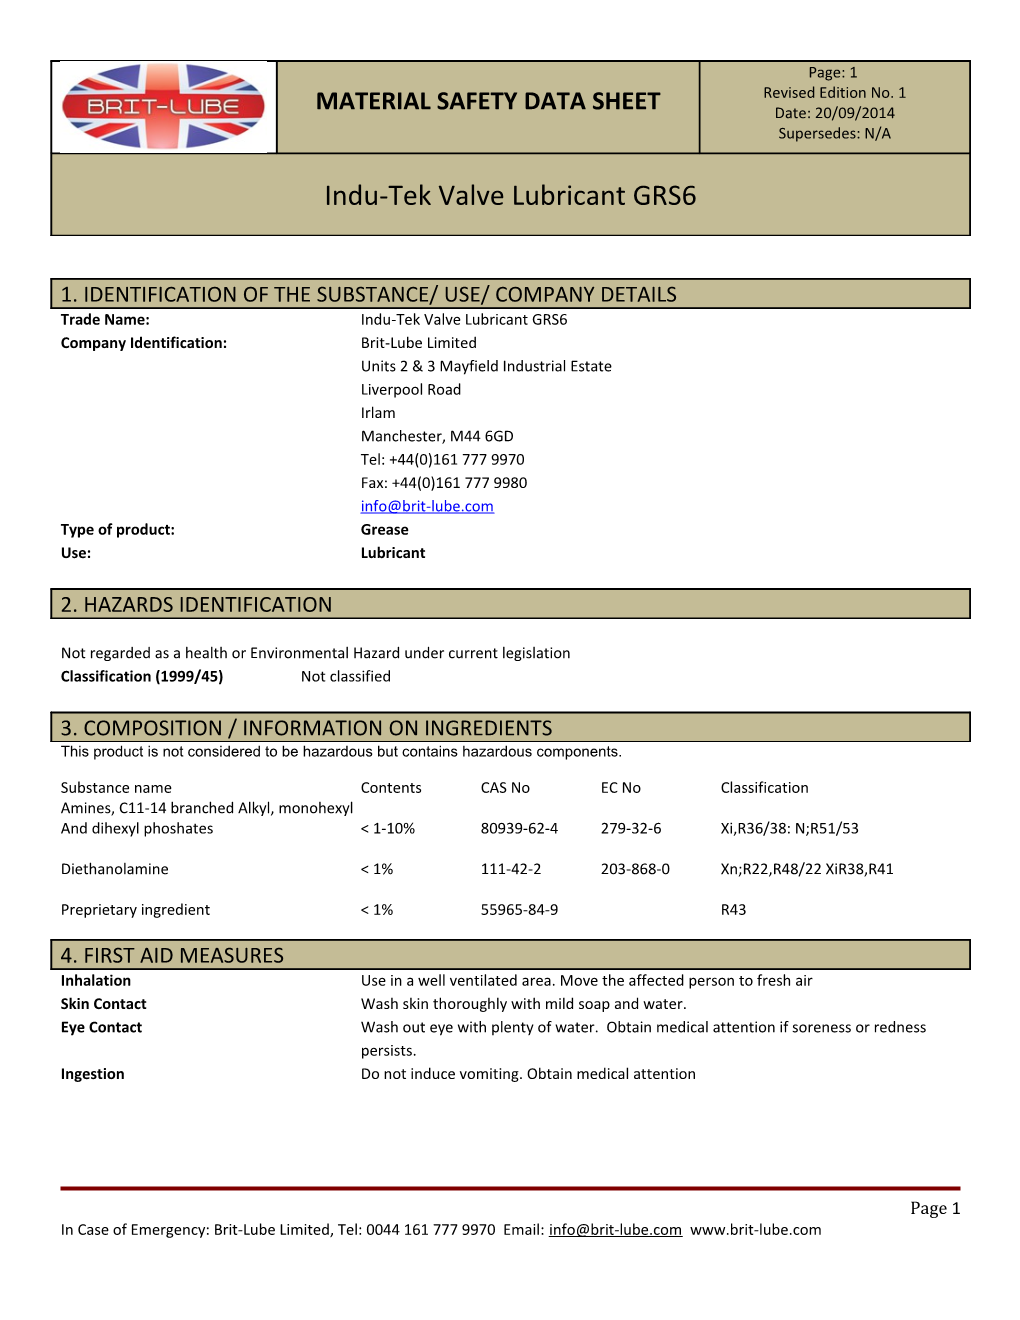 Trade Name:Indu-Tek Valve Lubricant GRS6